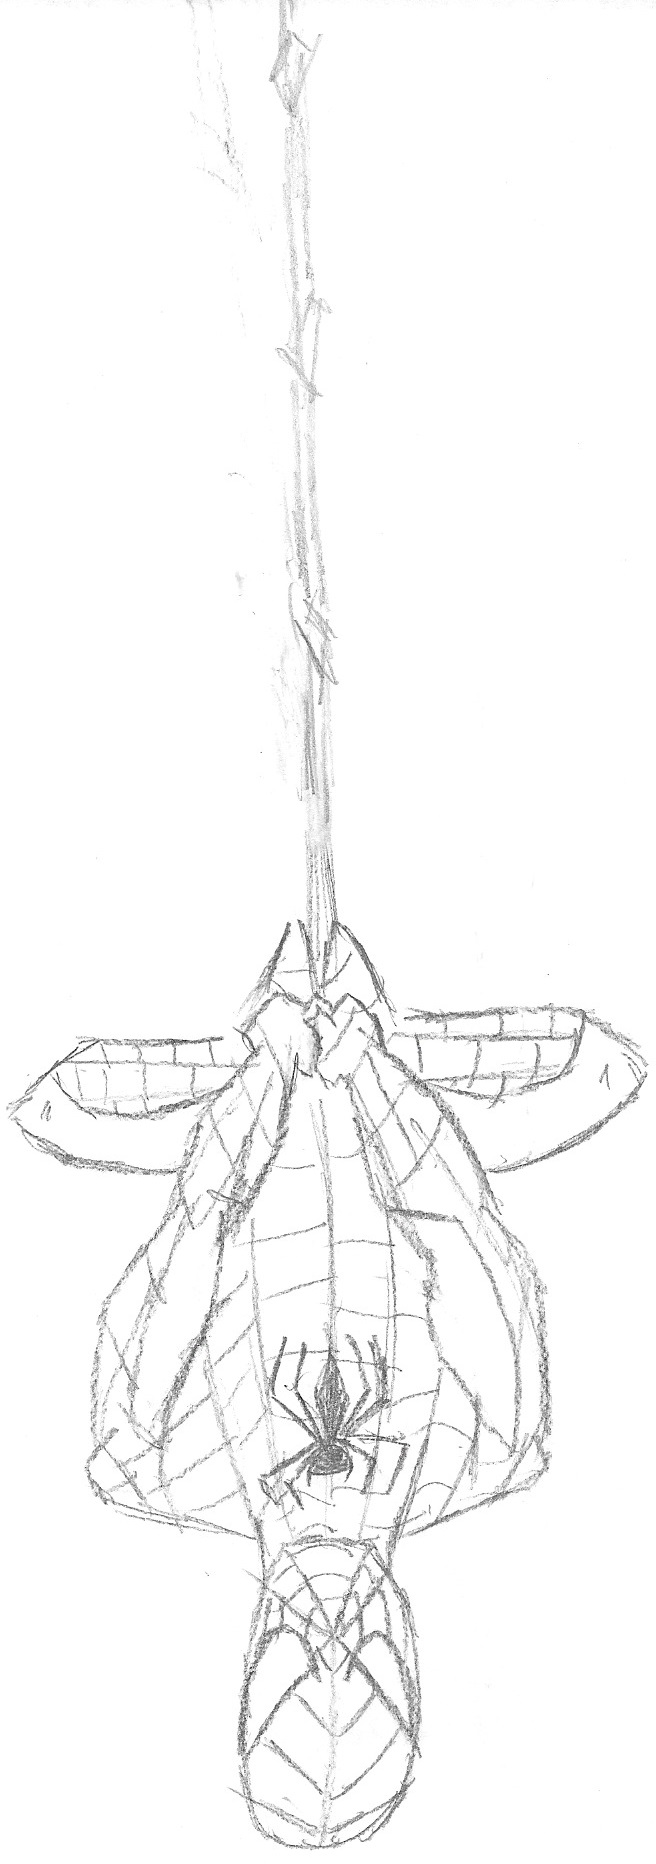 Spiderman Hanging Upsidedown Sketch by queenelizathedog on DeviantArt